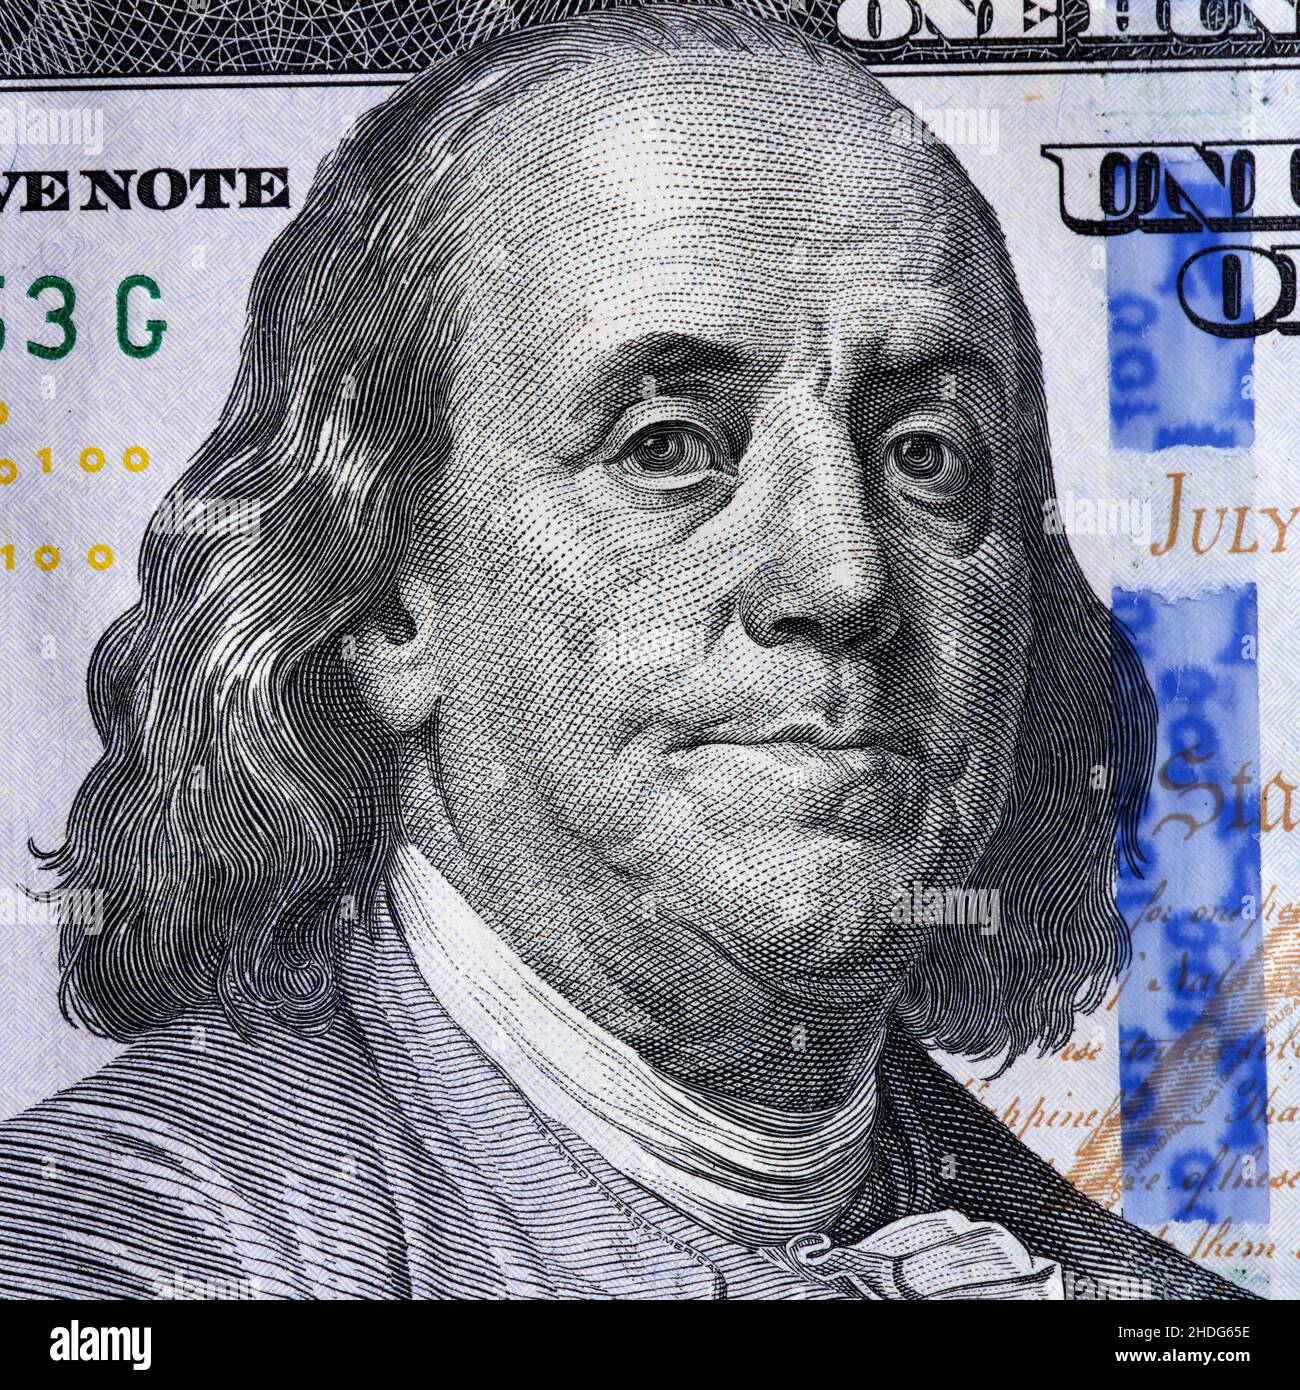 Benjamin Franklin on a one hundred dollar bill. Close up. Stock Photo